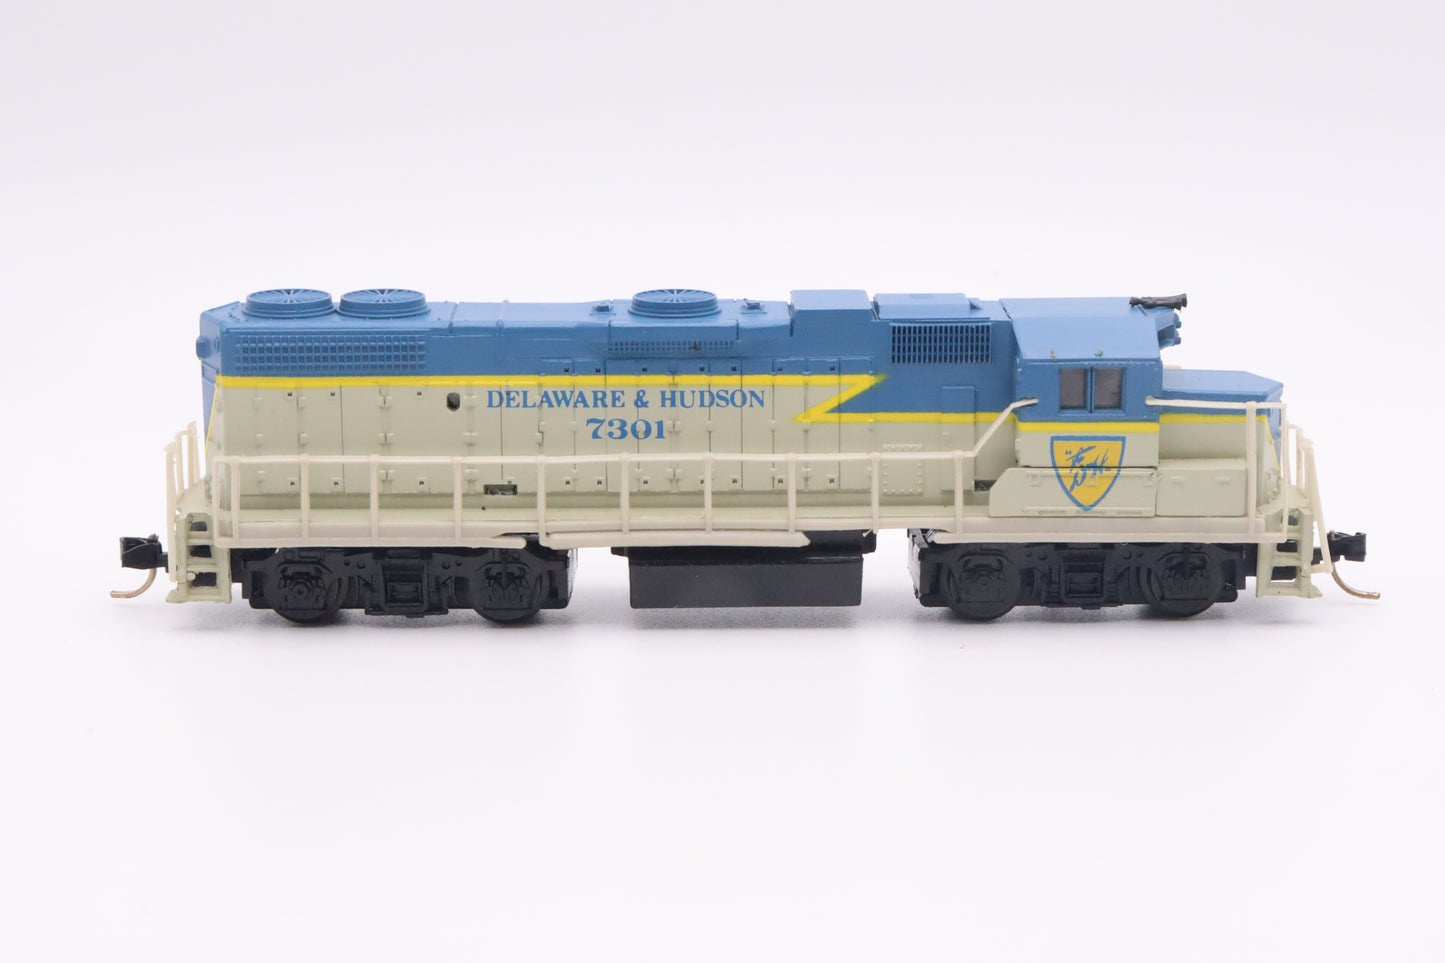 LL-7848 - GP-38 Locomotive - Delaware & Hudson - DH-7301